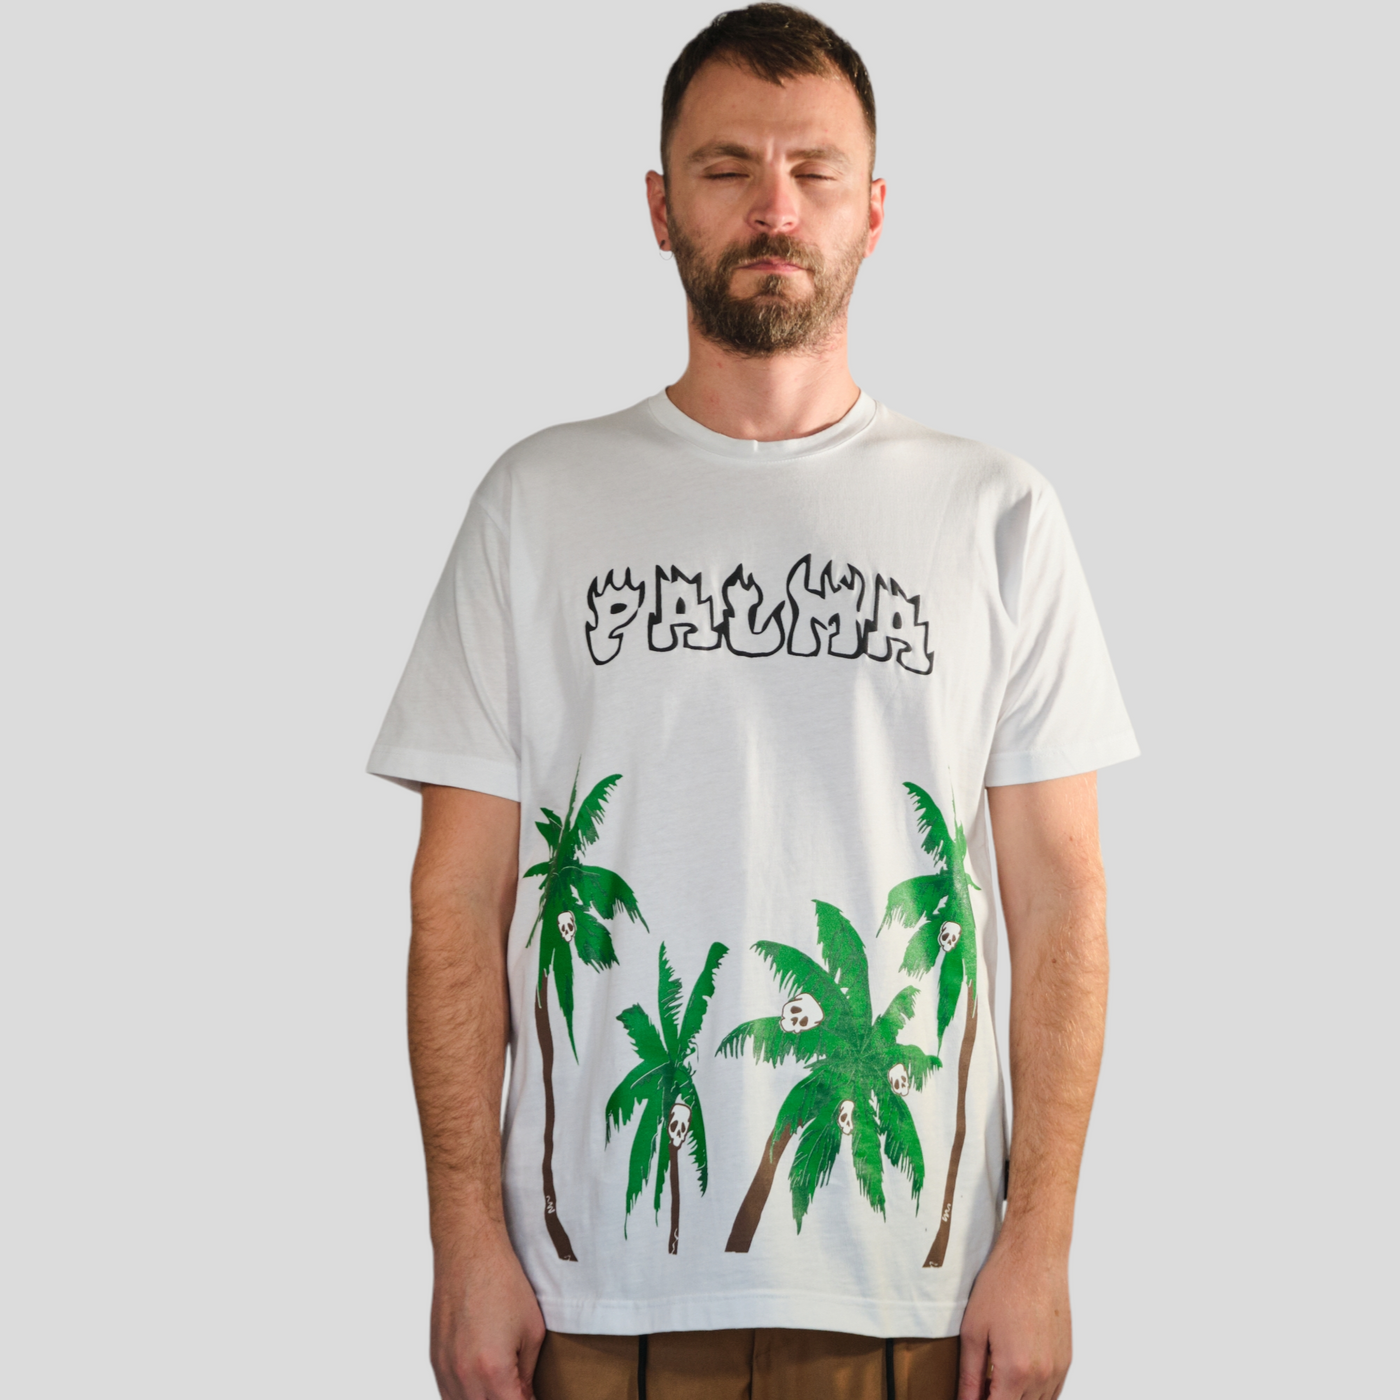 T-Shirt PALMA